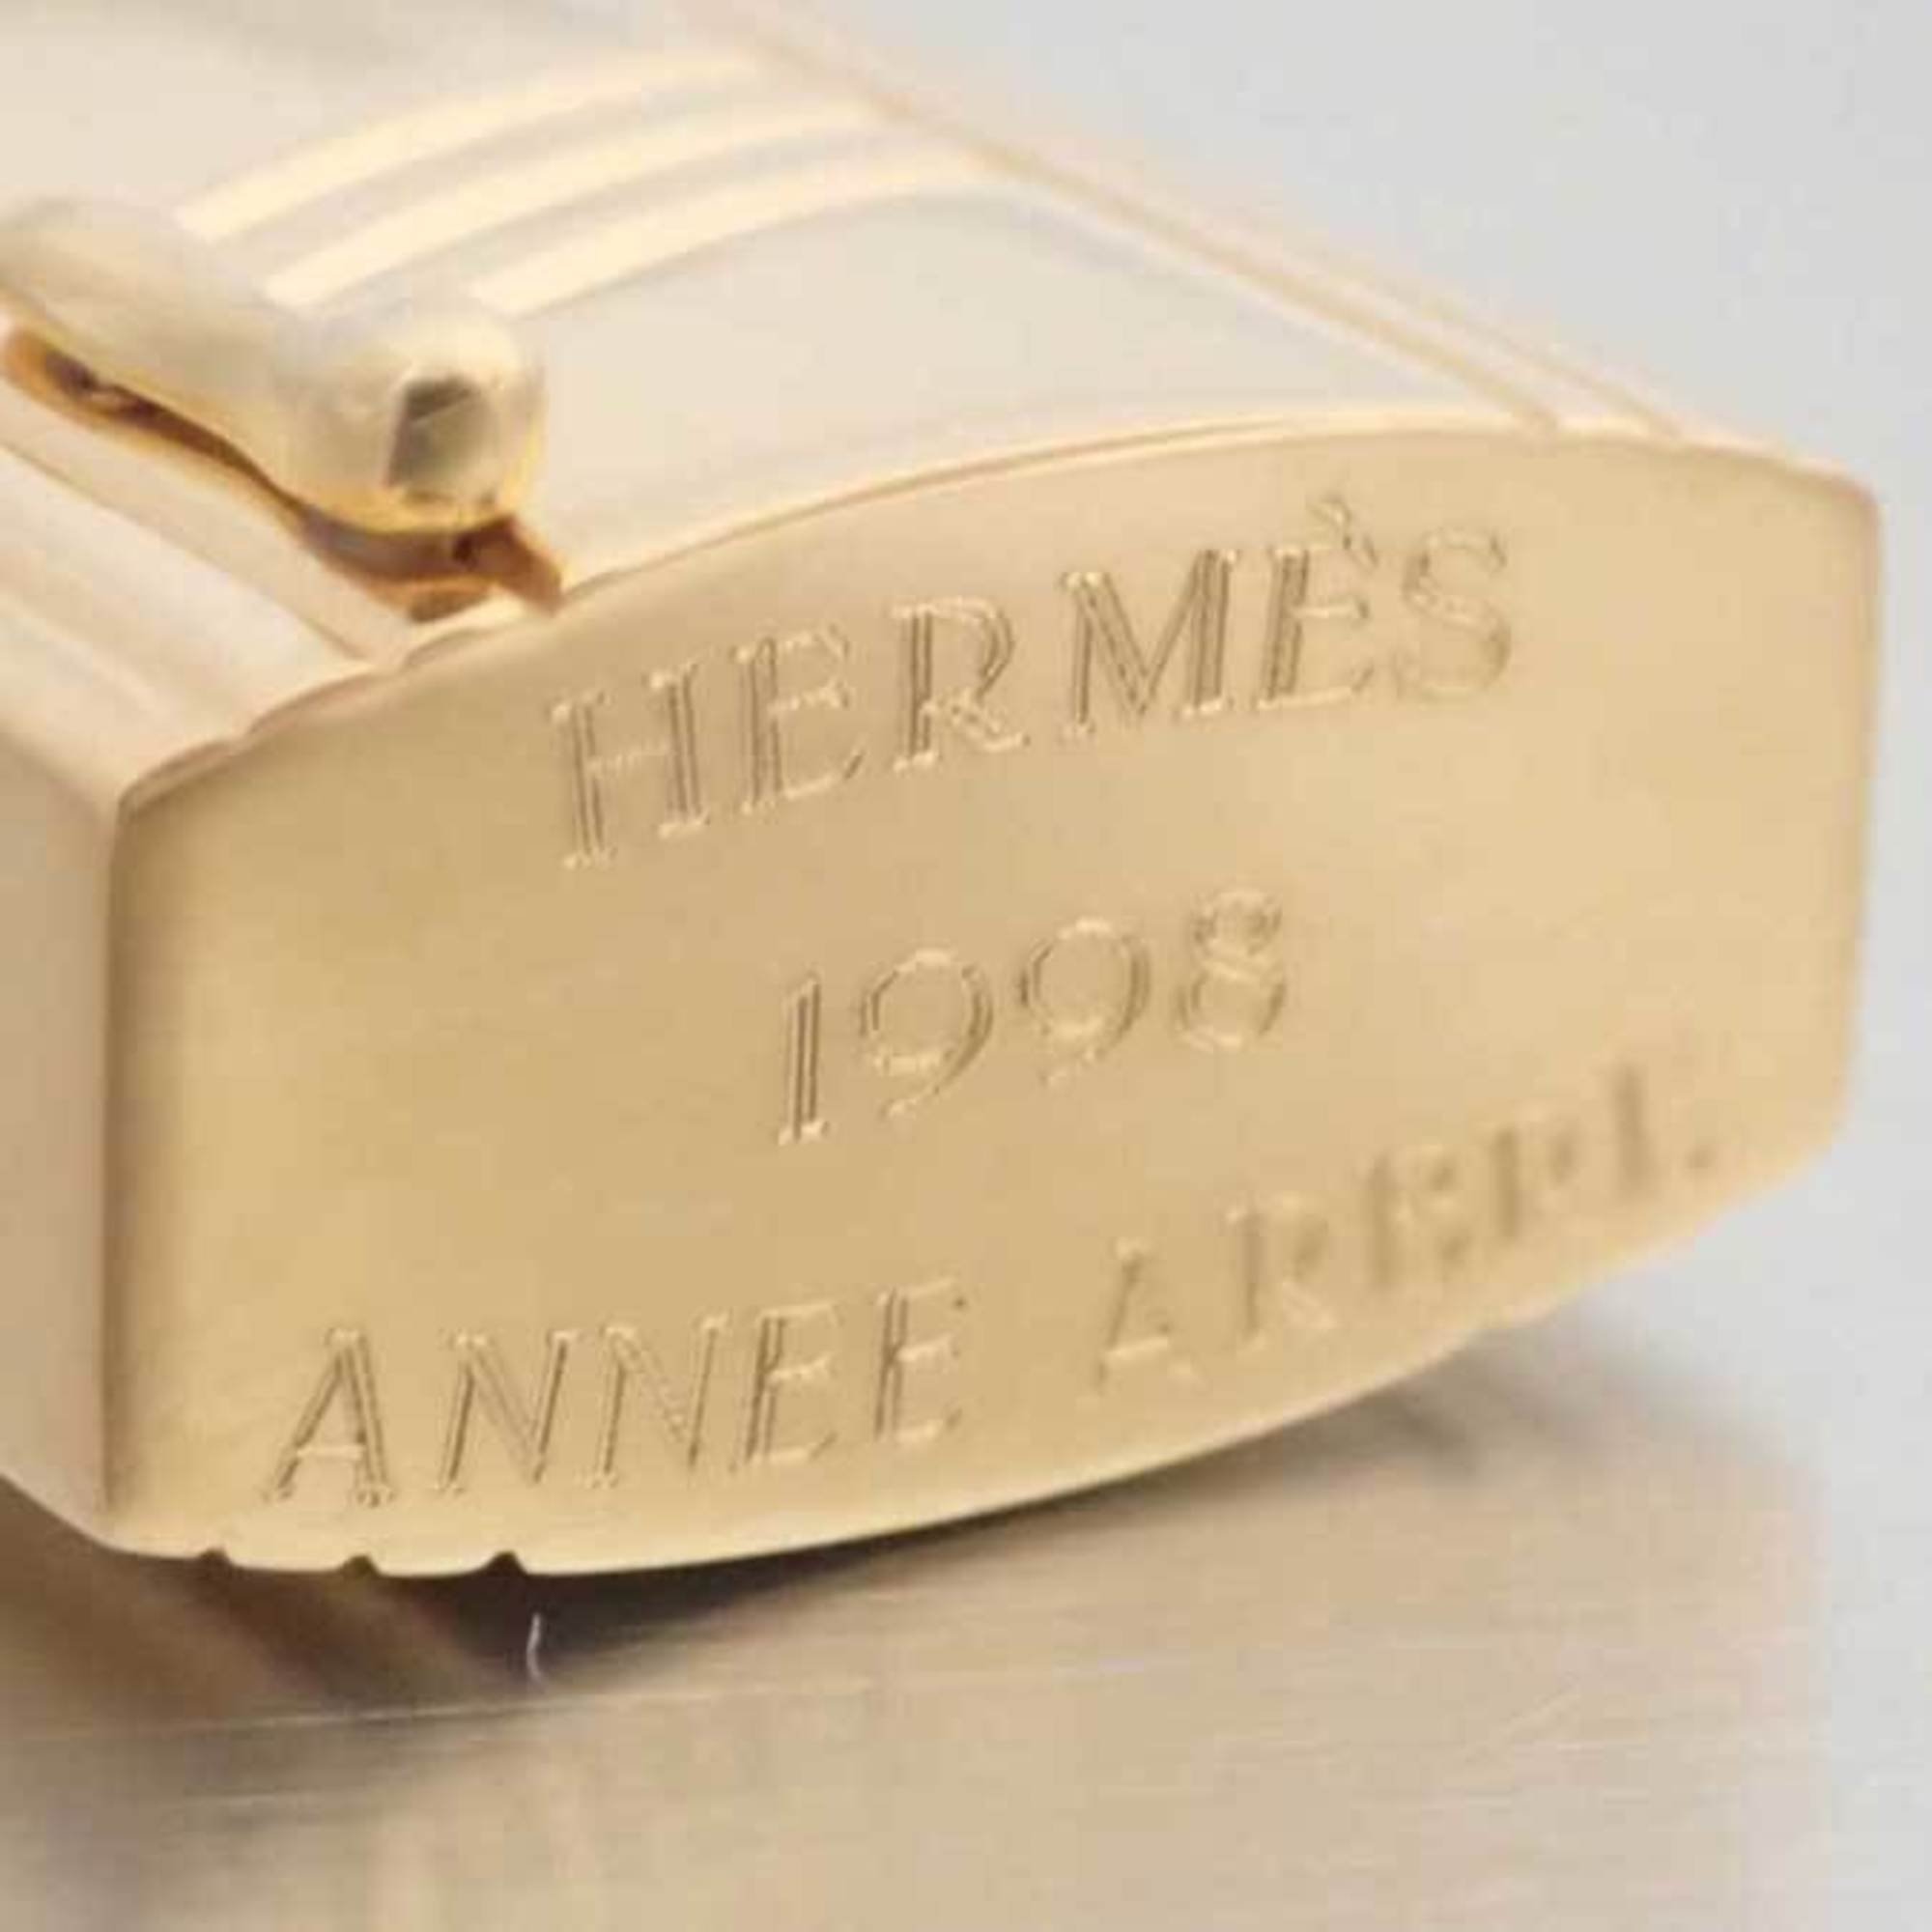 Hermes HERMES cadena charm pendant 1998 ANNEE ARBRE gold metal material women's men's